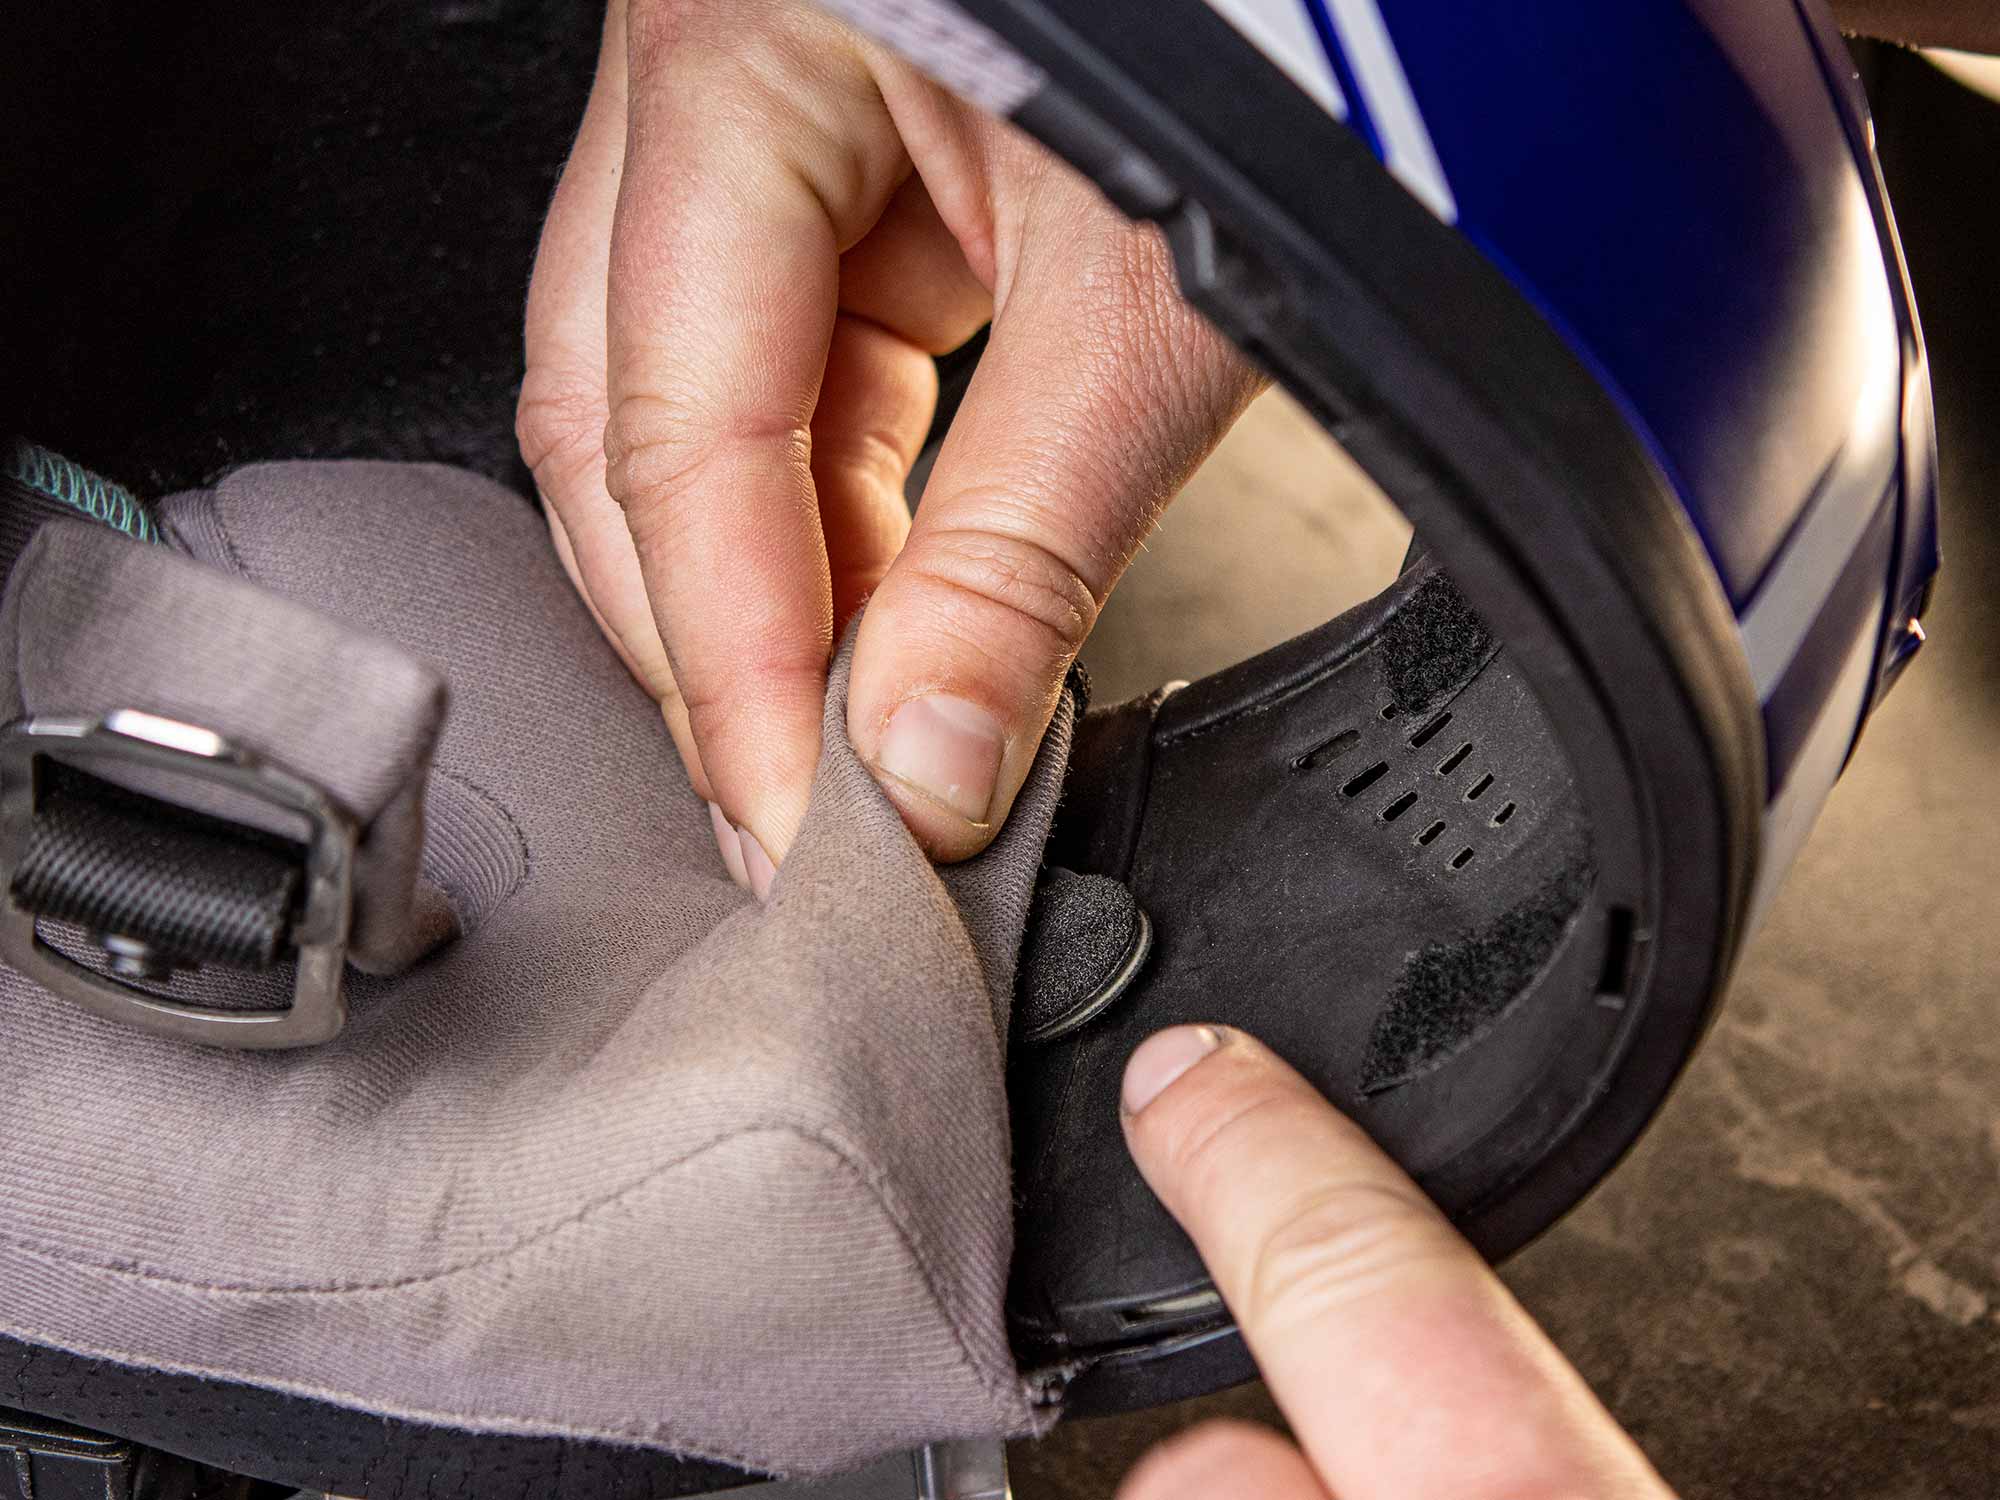 What foam is best for helmet padding?